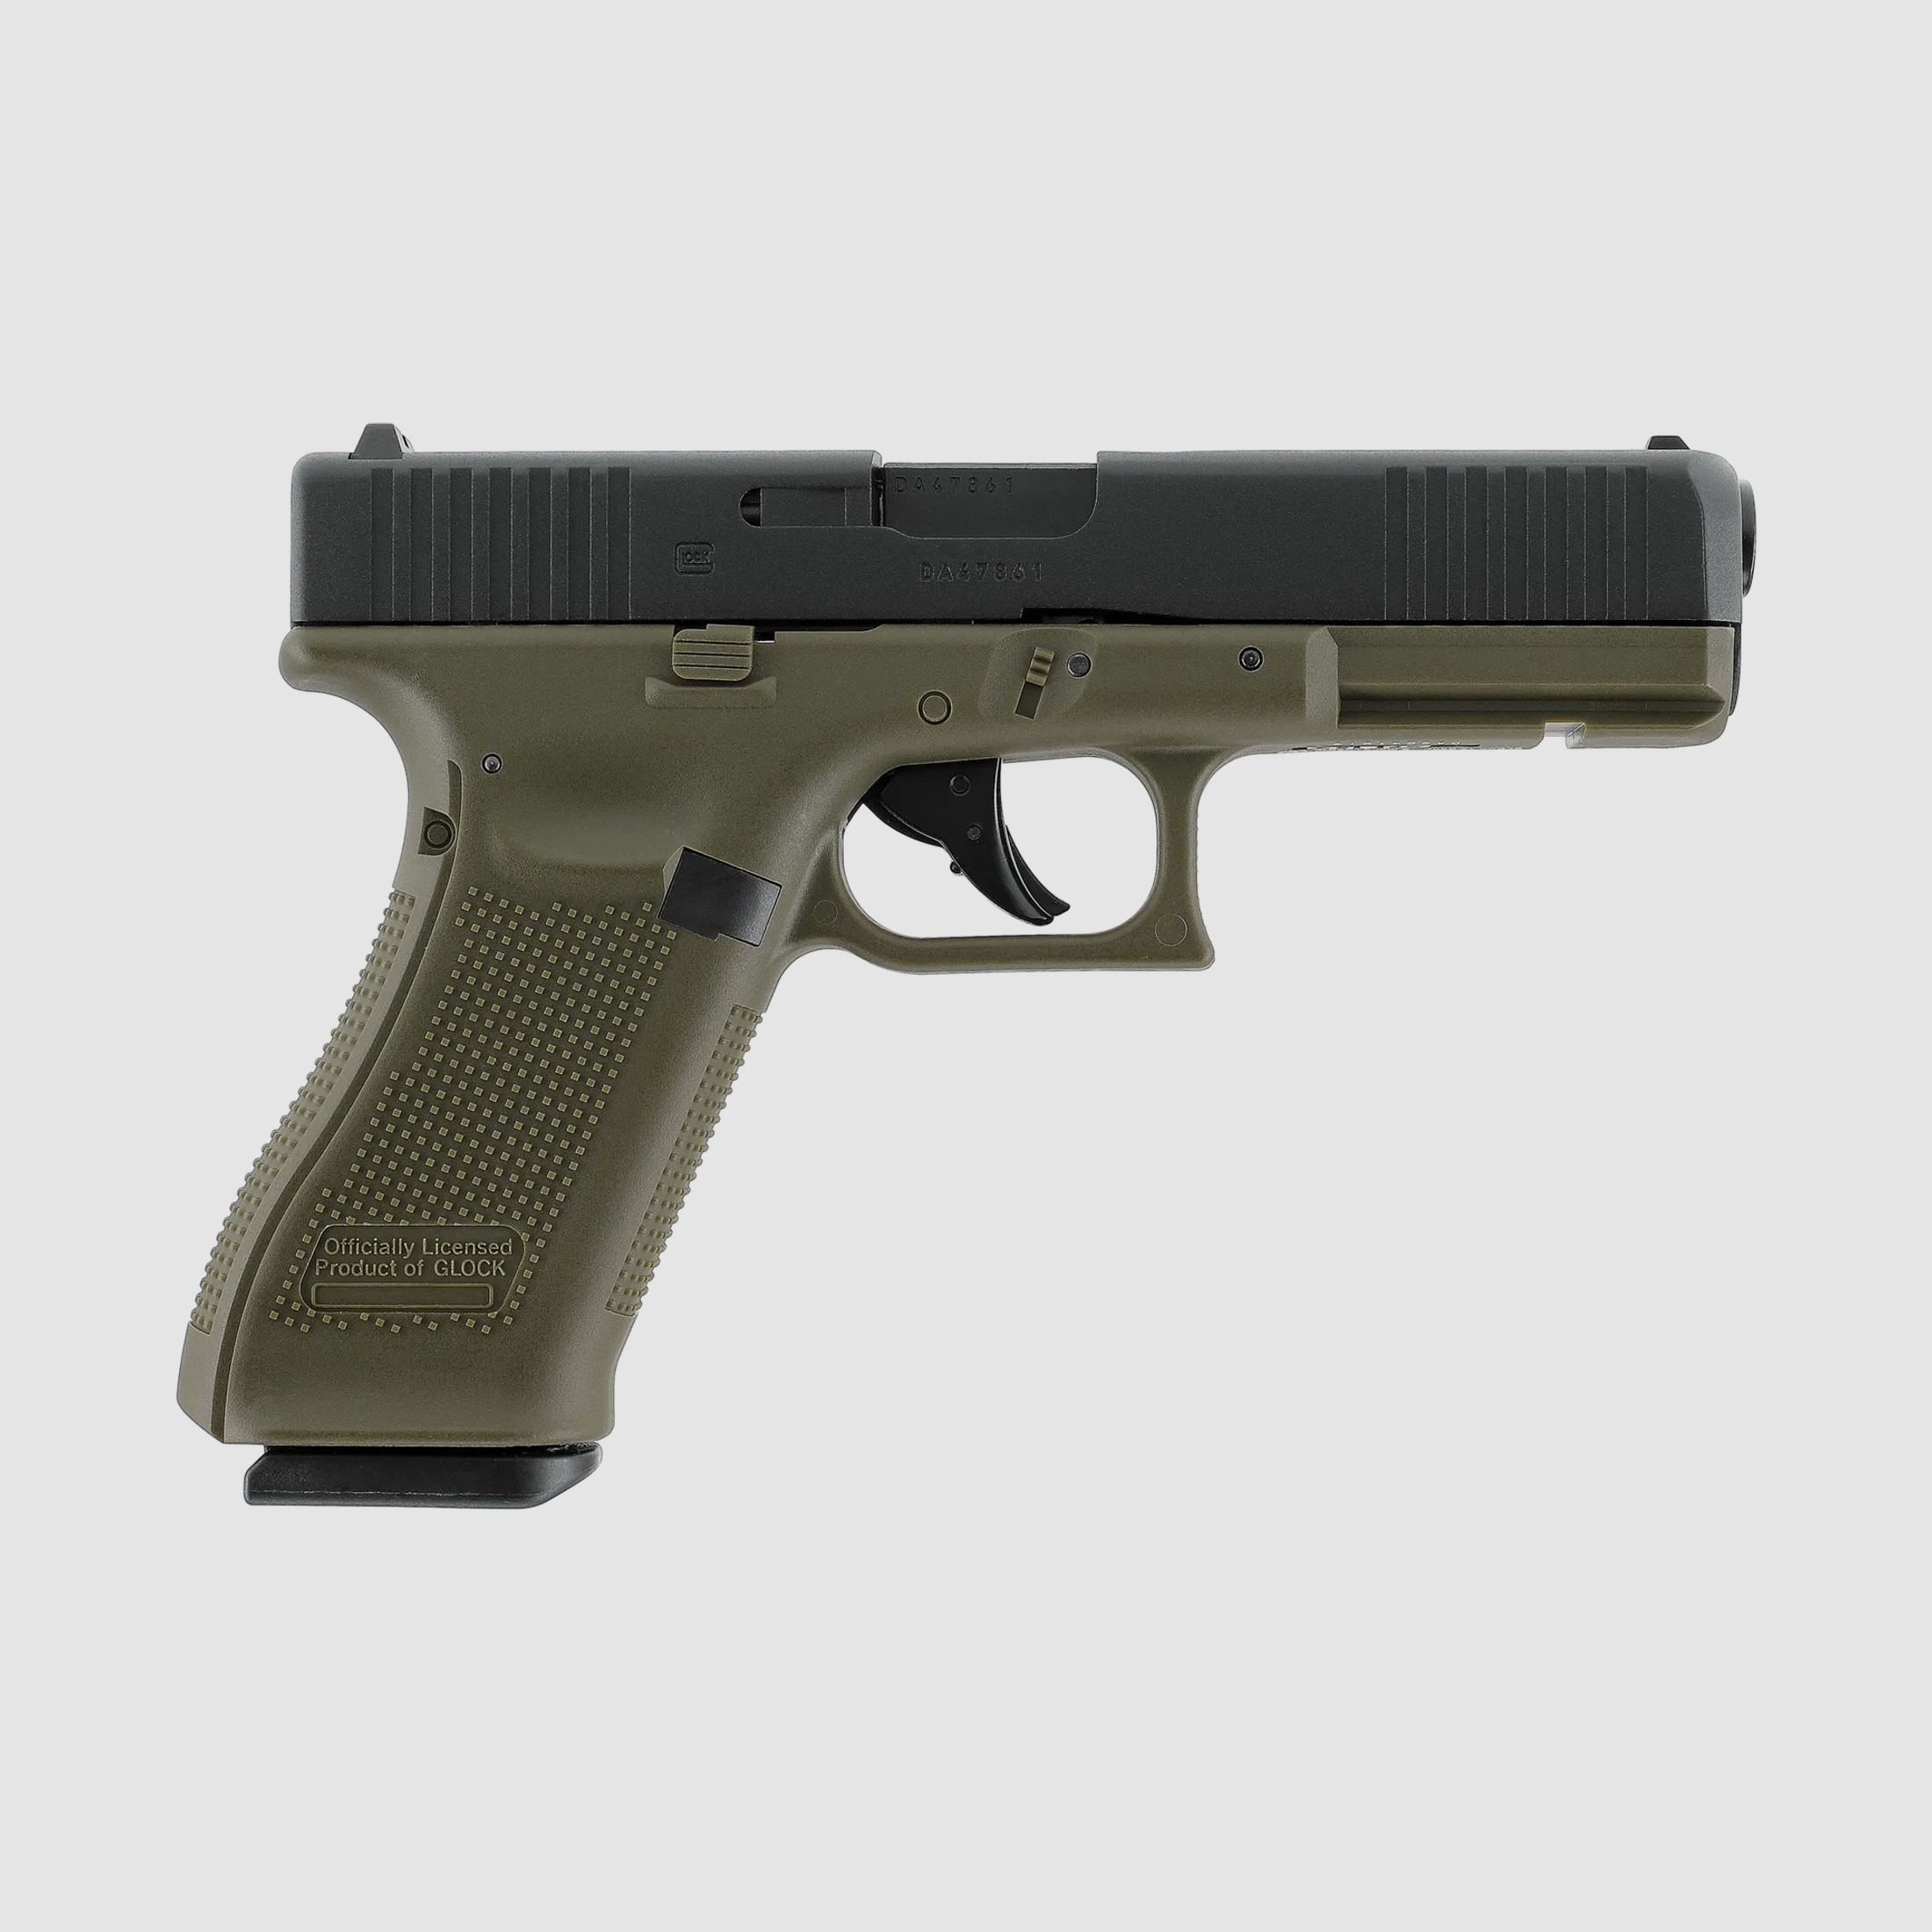 Glock 17 Gen5 - Metal Slide, Co2 GBB - Battlefield Green | UMAREX